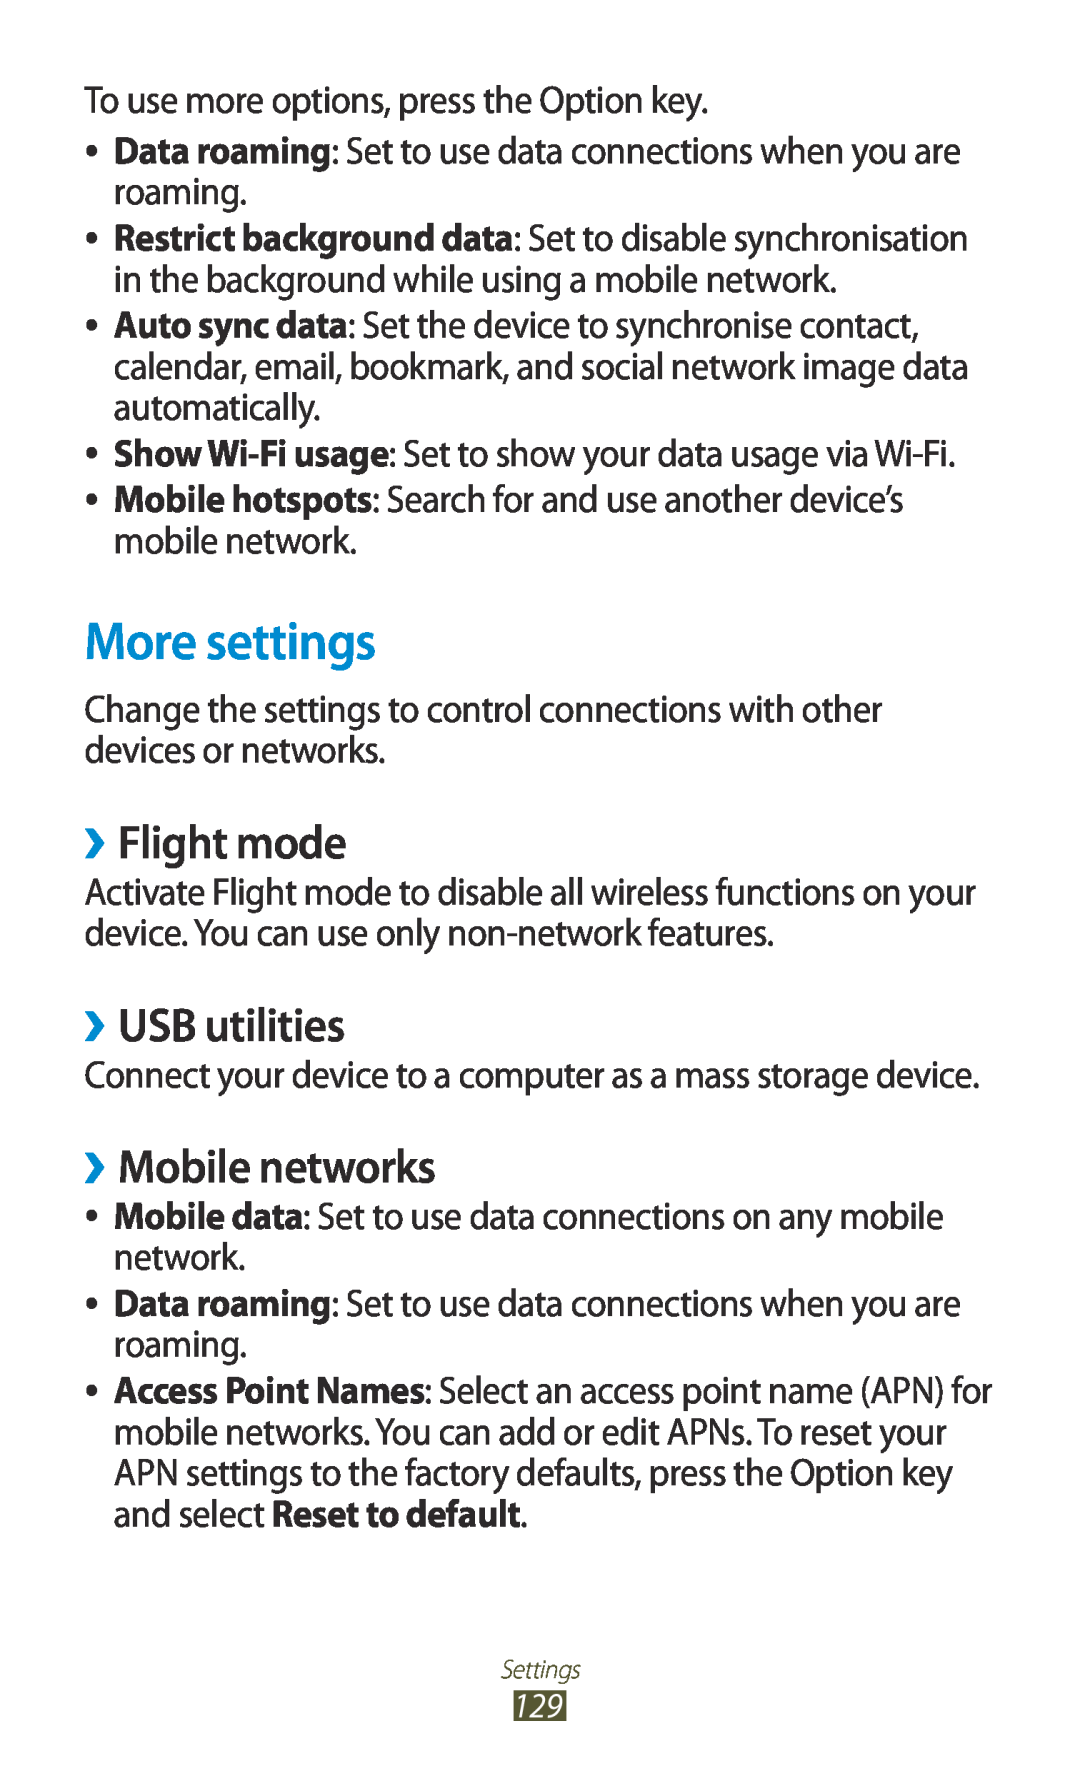 Samsung GT-I8160OKATPL, GT-I8160ZWADBT, GT-I8160OKAEPL More settings, ››Flight mode, ››USB utilities, ››Mobile networks 